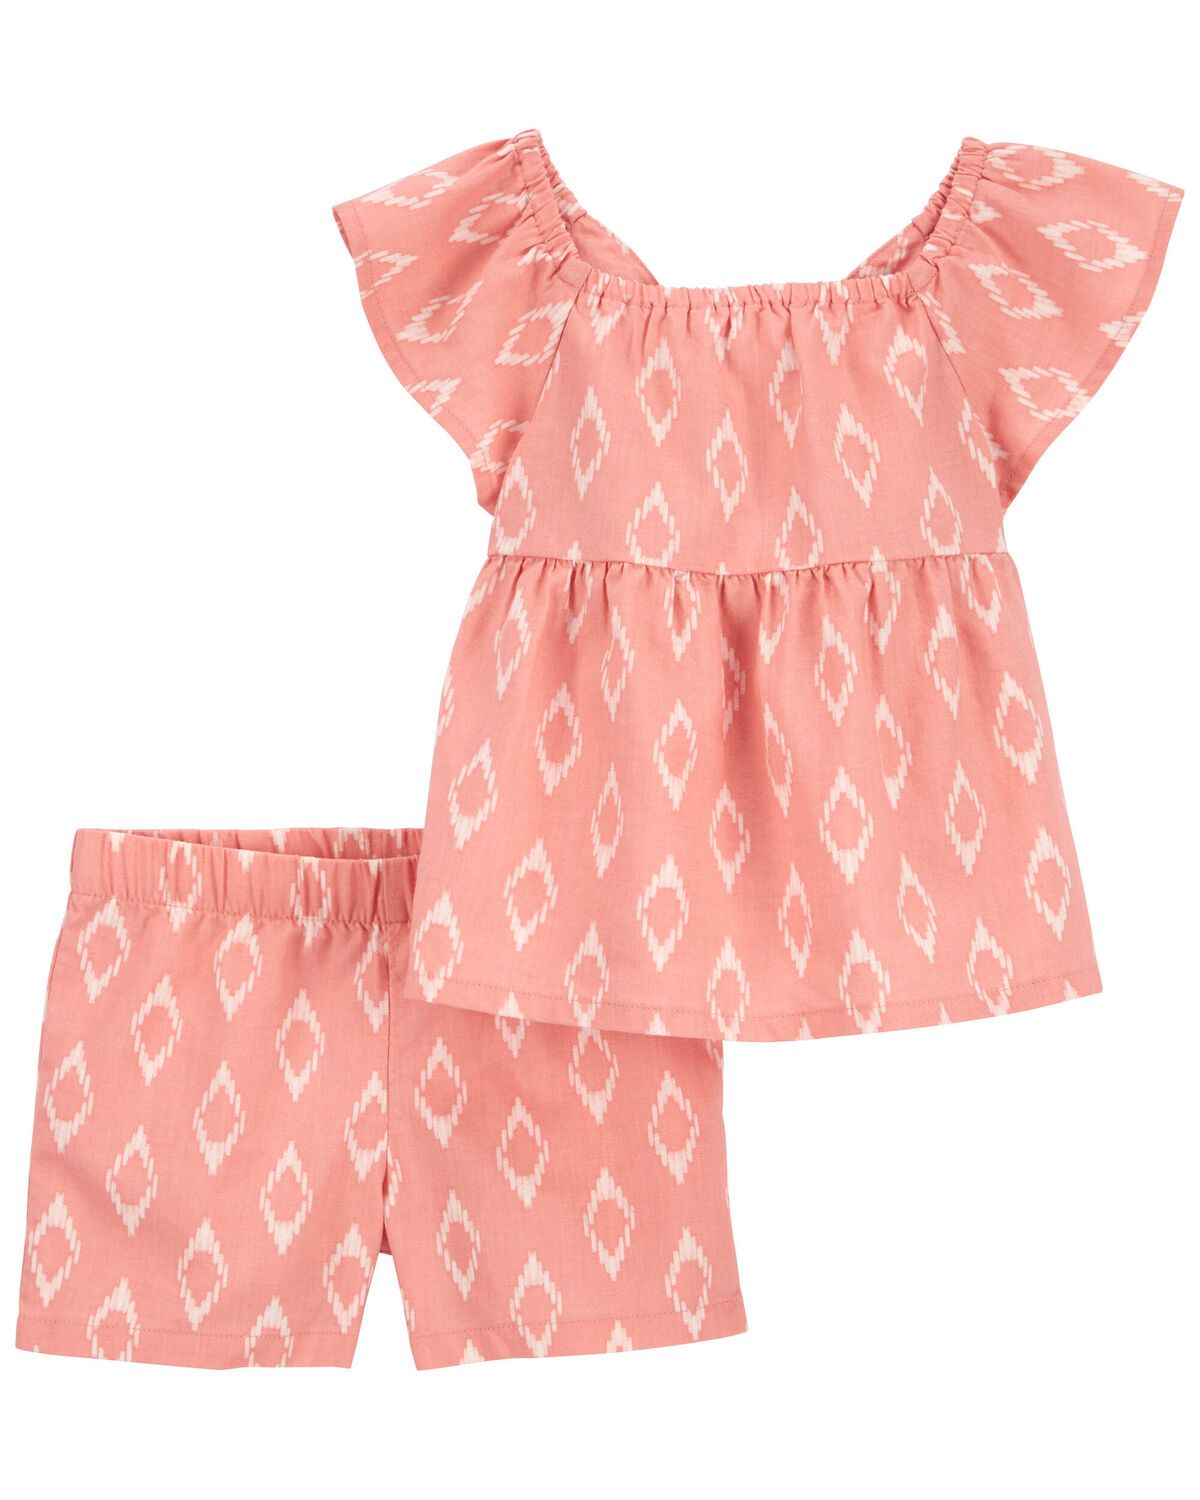 Toddler 2-Piece Linen Outfit Set | Carter's